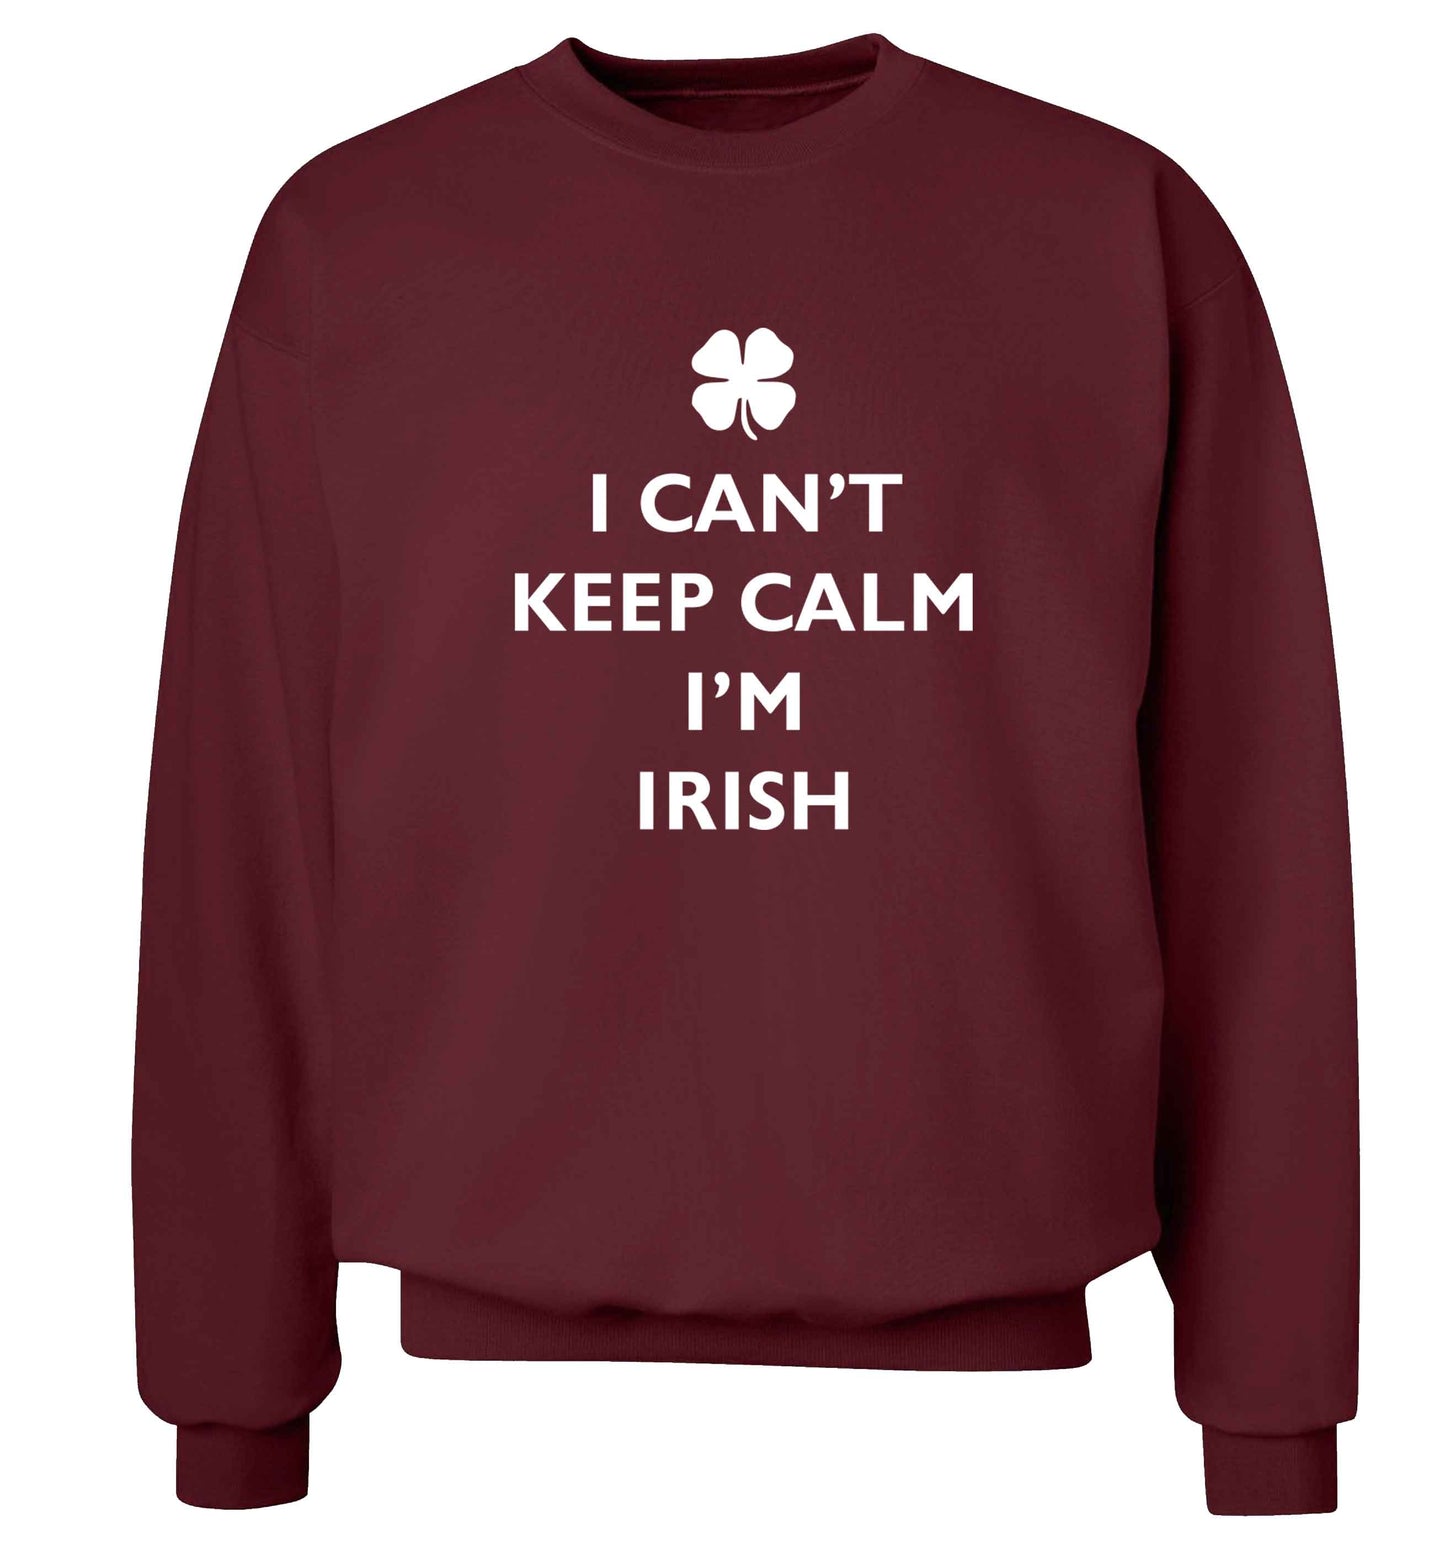 I can't keep calm I'm Irish adult's unisex maroon sweater 2XL